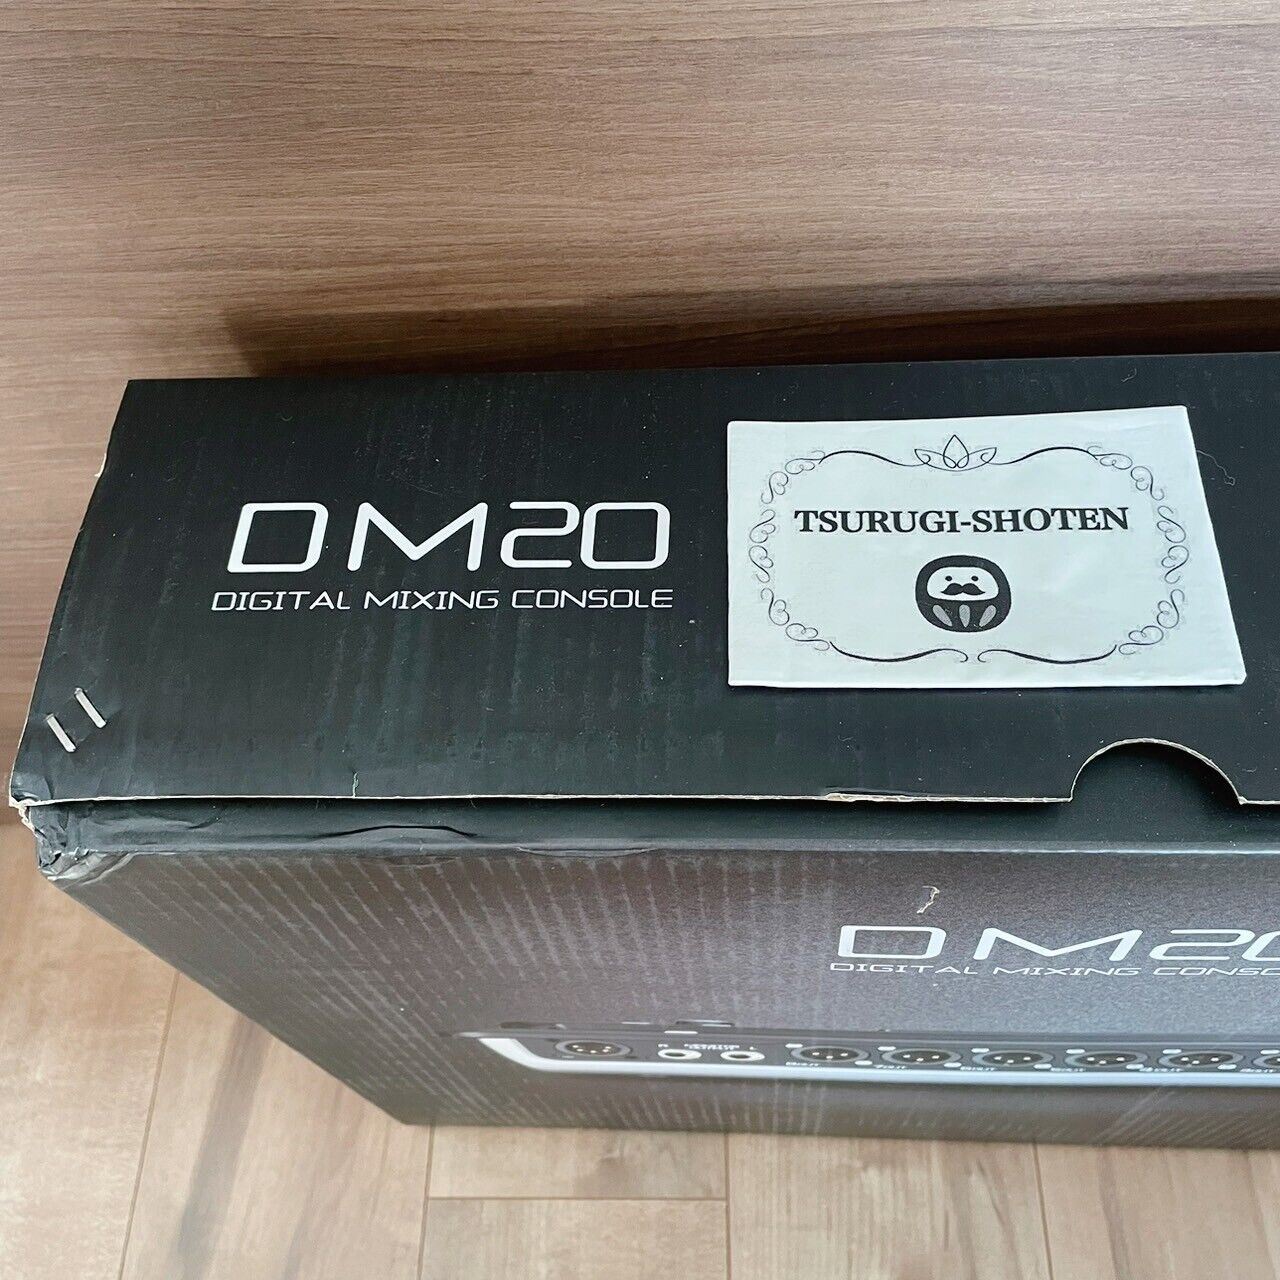 CLASSIC PRO DM20 Digital Mixer Motor Fader iPad remote JAPAN New